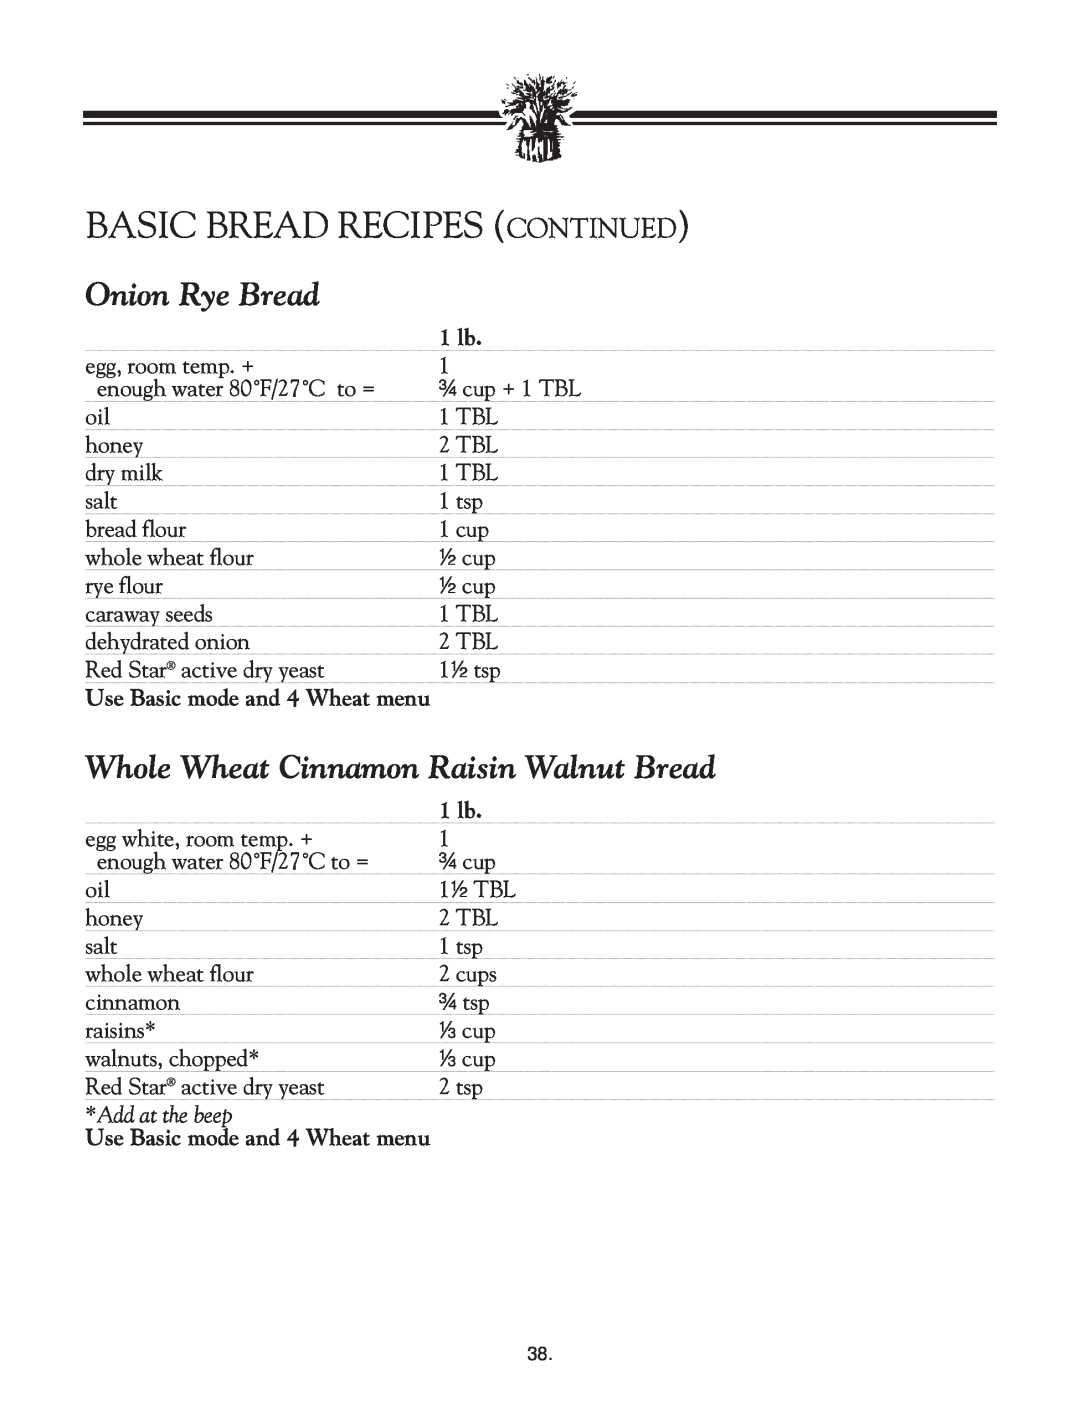 Breadman TR2828G Onion Rye Bread, Whole Wheat Cinnamon Raisin Walnut Bread, Basic Bread Recipes Continued, Add at the beep 